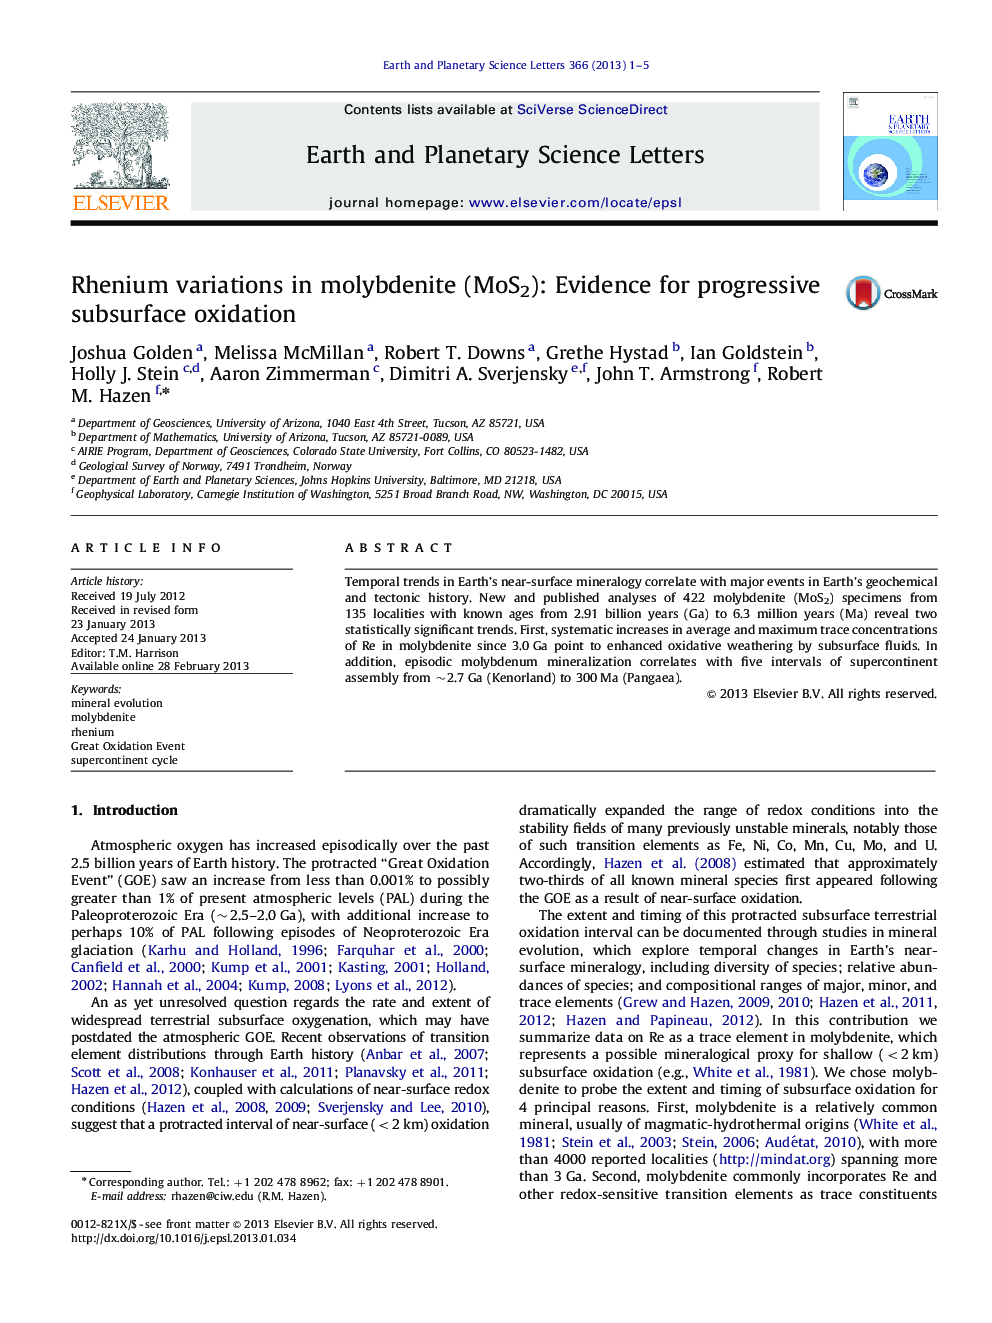 Rhenium variations in molybdenite (MoS2): Evidence for progressive subsurface oxidation